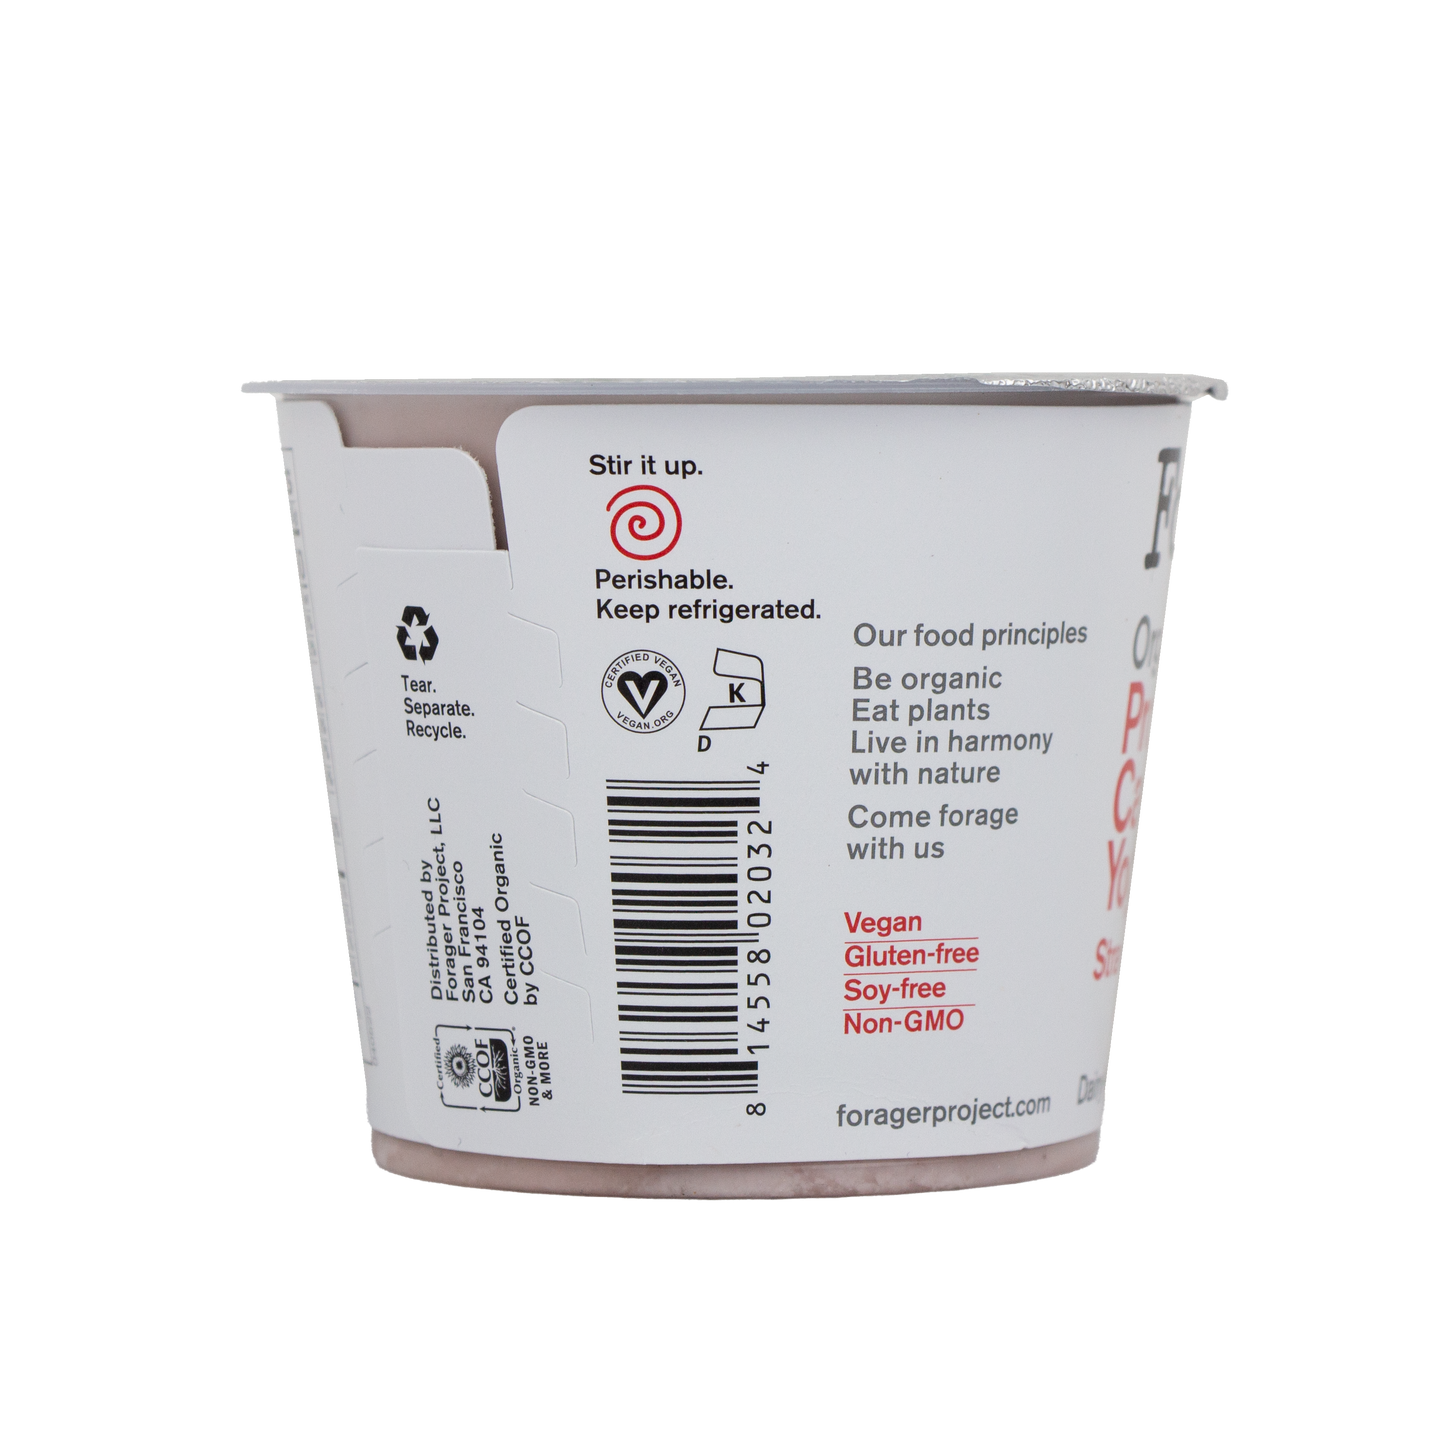 Forager Project - Organic Probiotic Cashewmilk Yogurt Strawberry (5.3 oz) (Store Pick-Up Only)